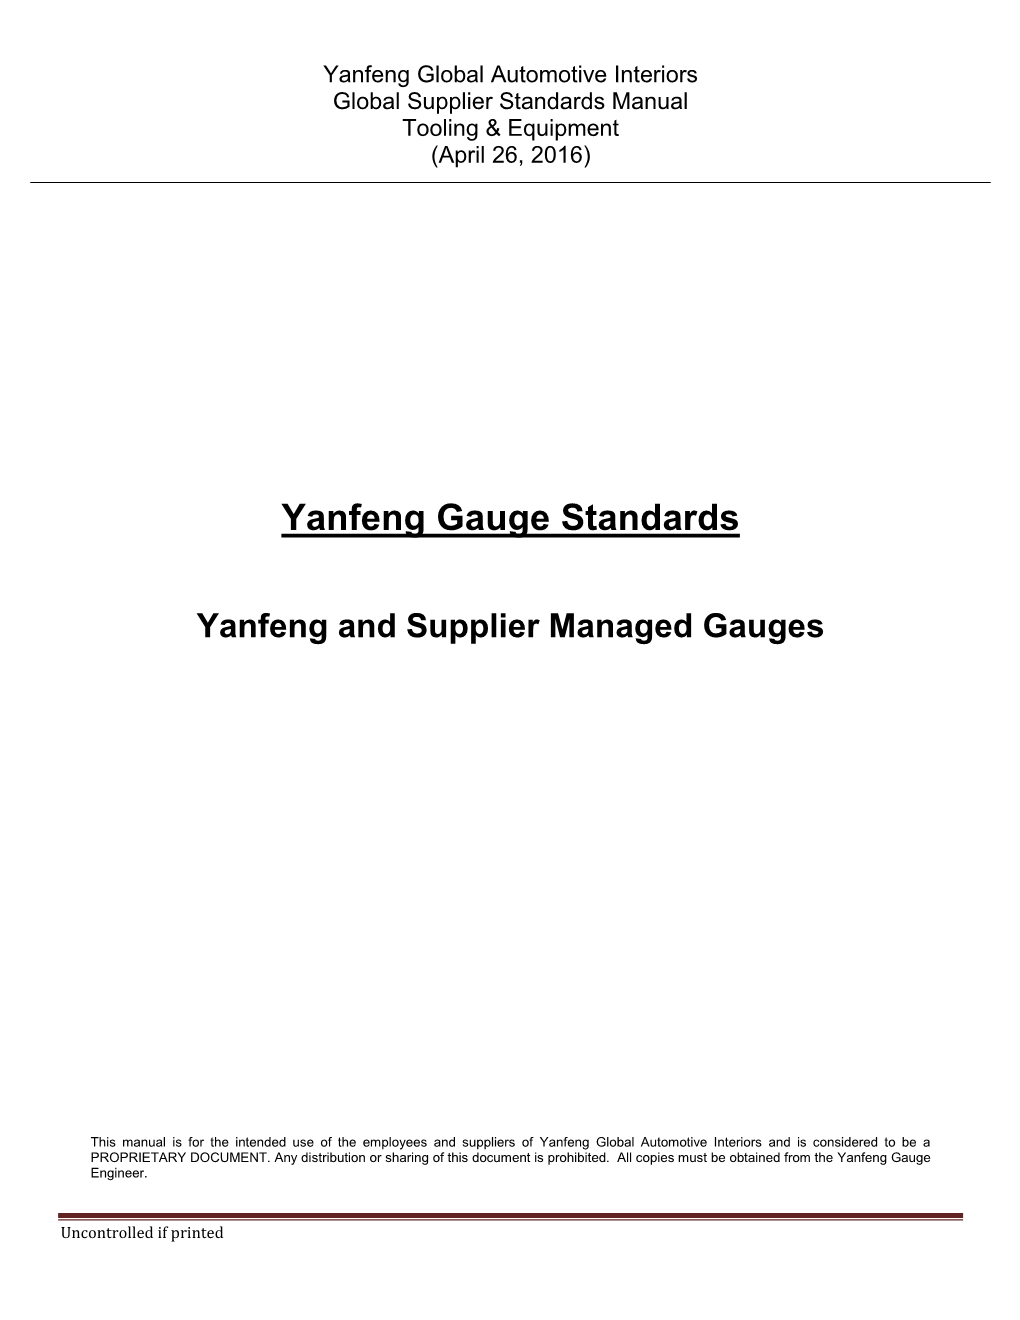 Yanfeng Gauge Standards